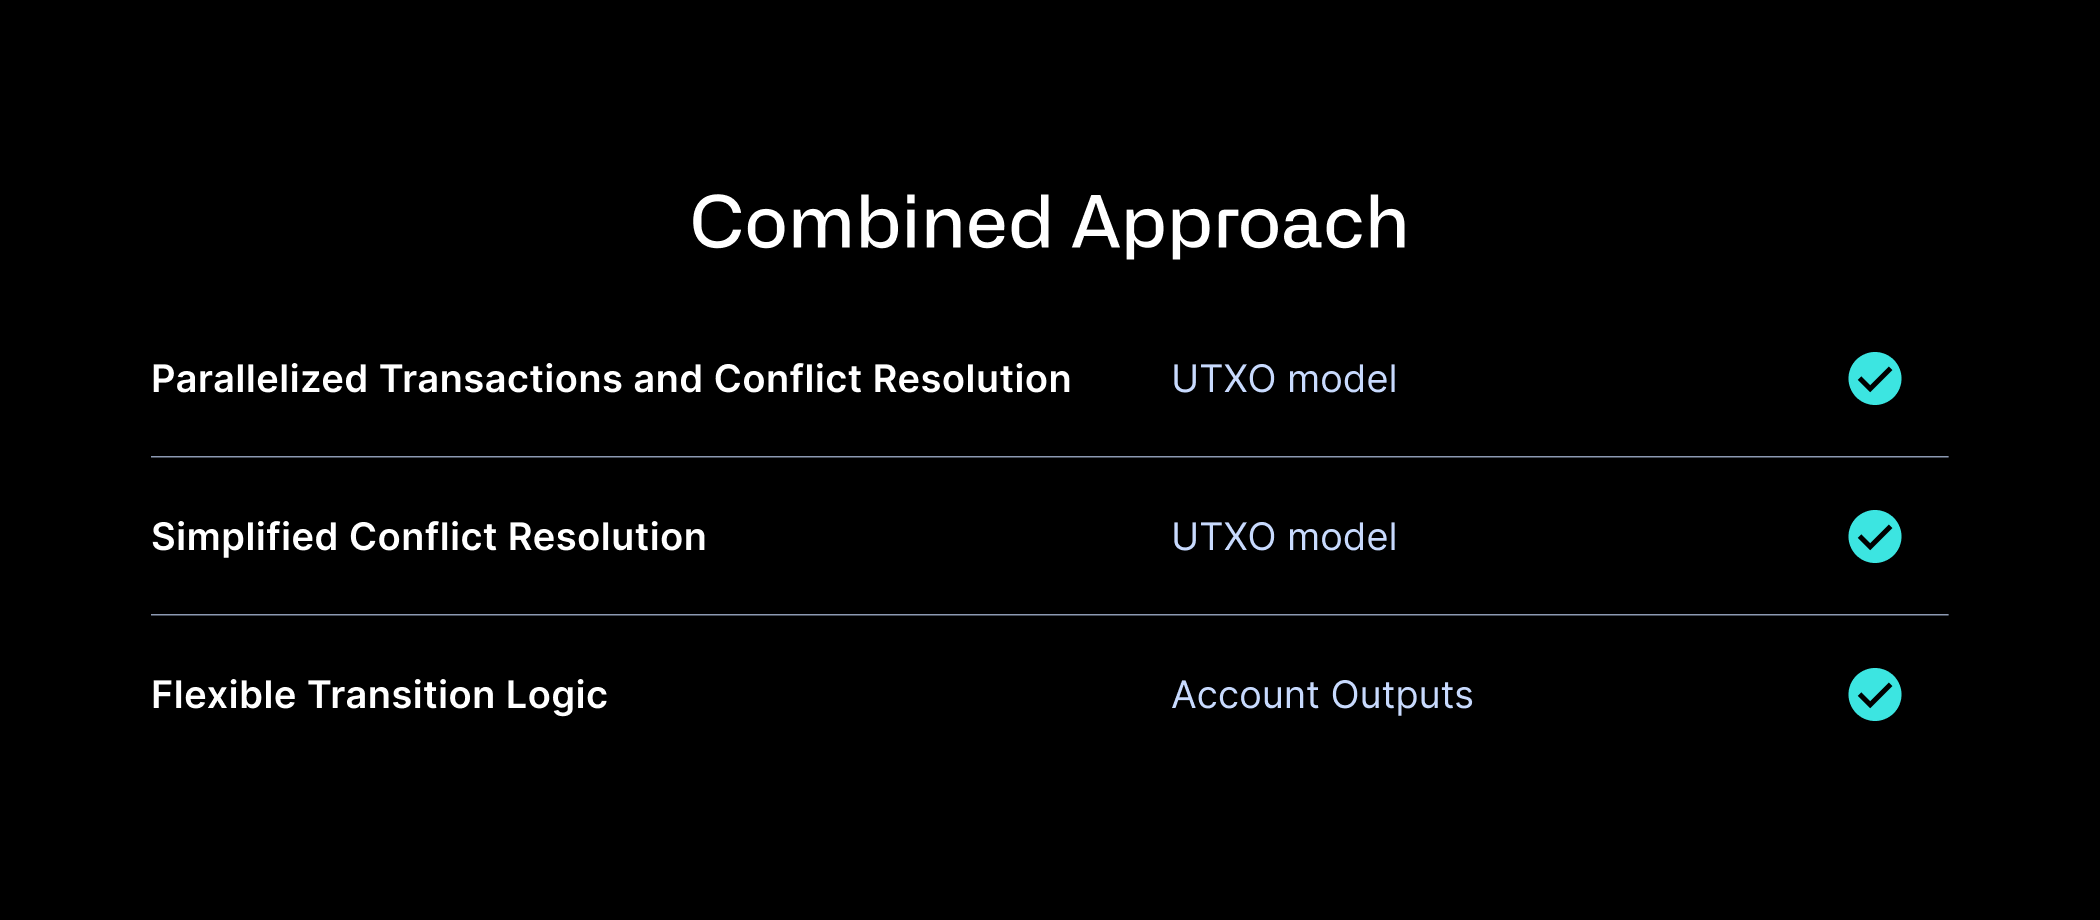 UTXO vs Accounts: Merging the Best of Both Worlds